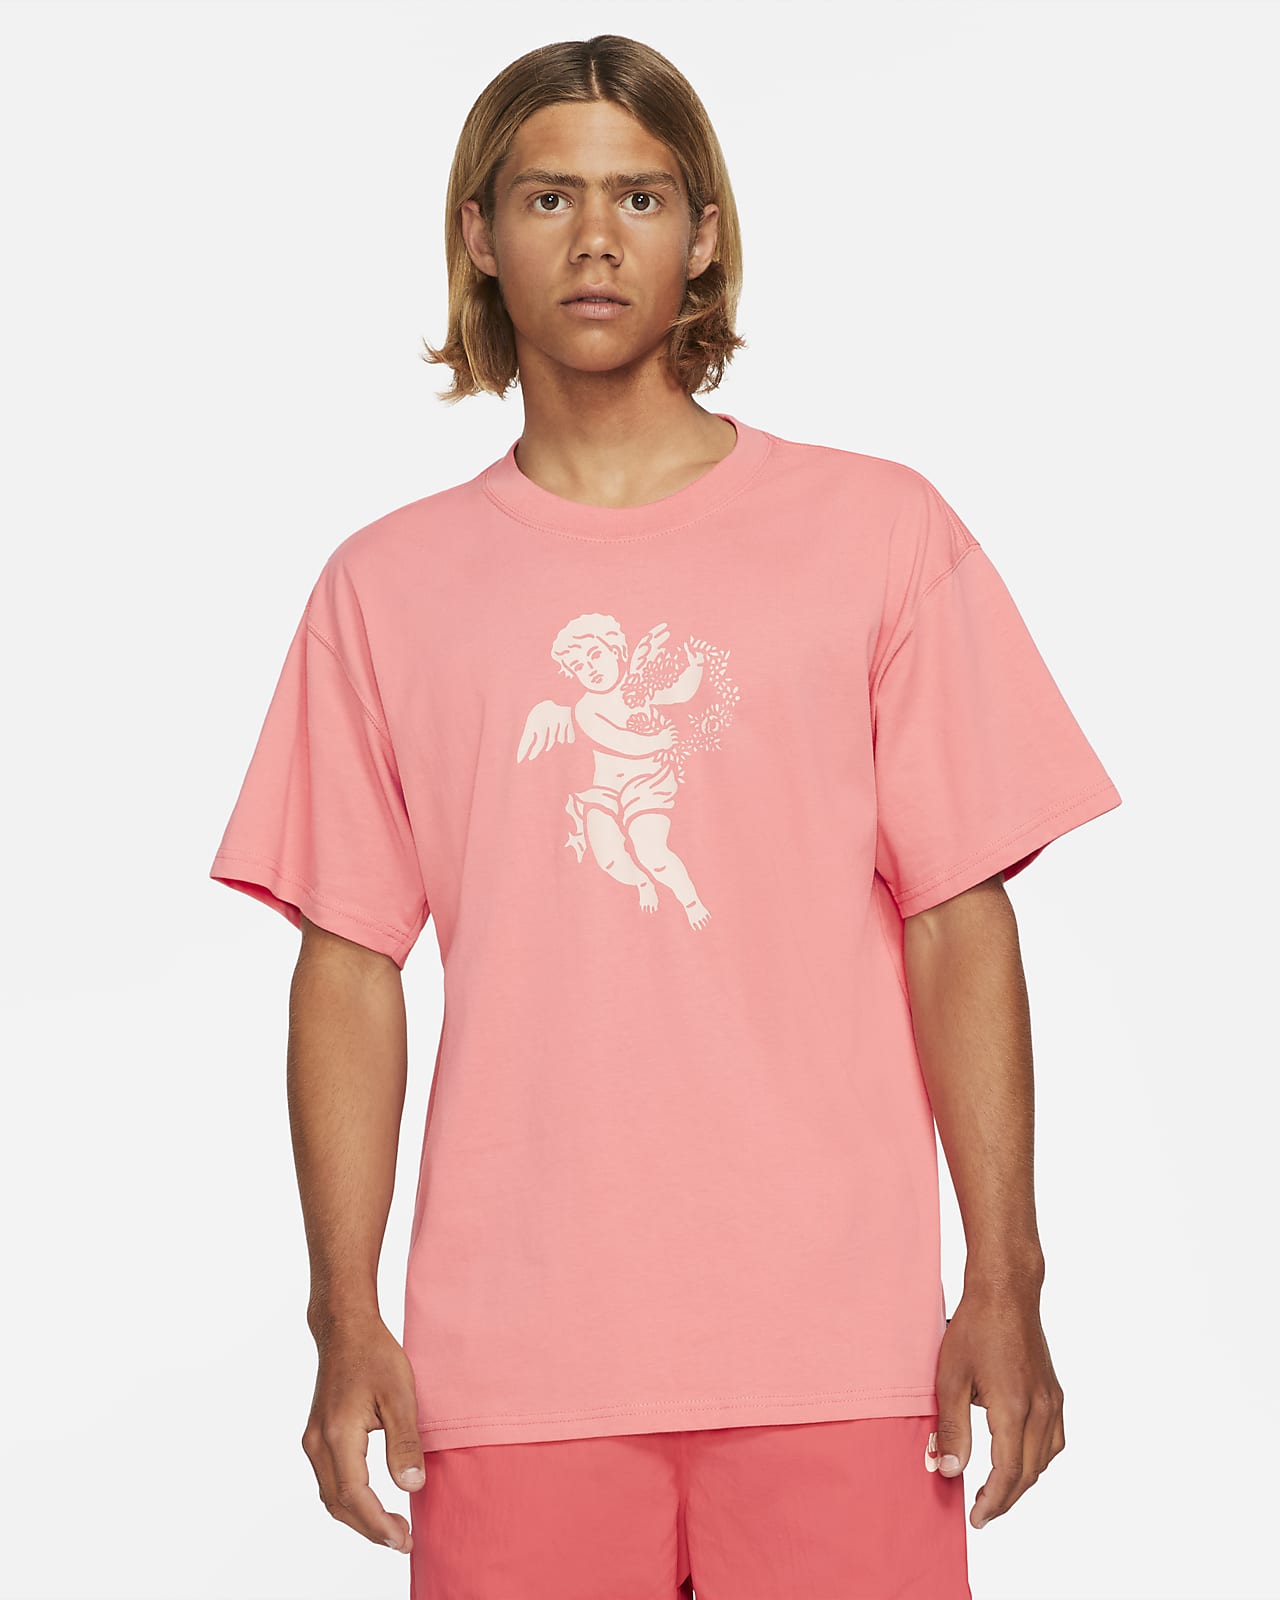 Nike SB Men's Graphic Skate T-Shirt. Nike.com عود ابيض